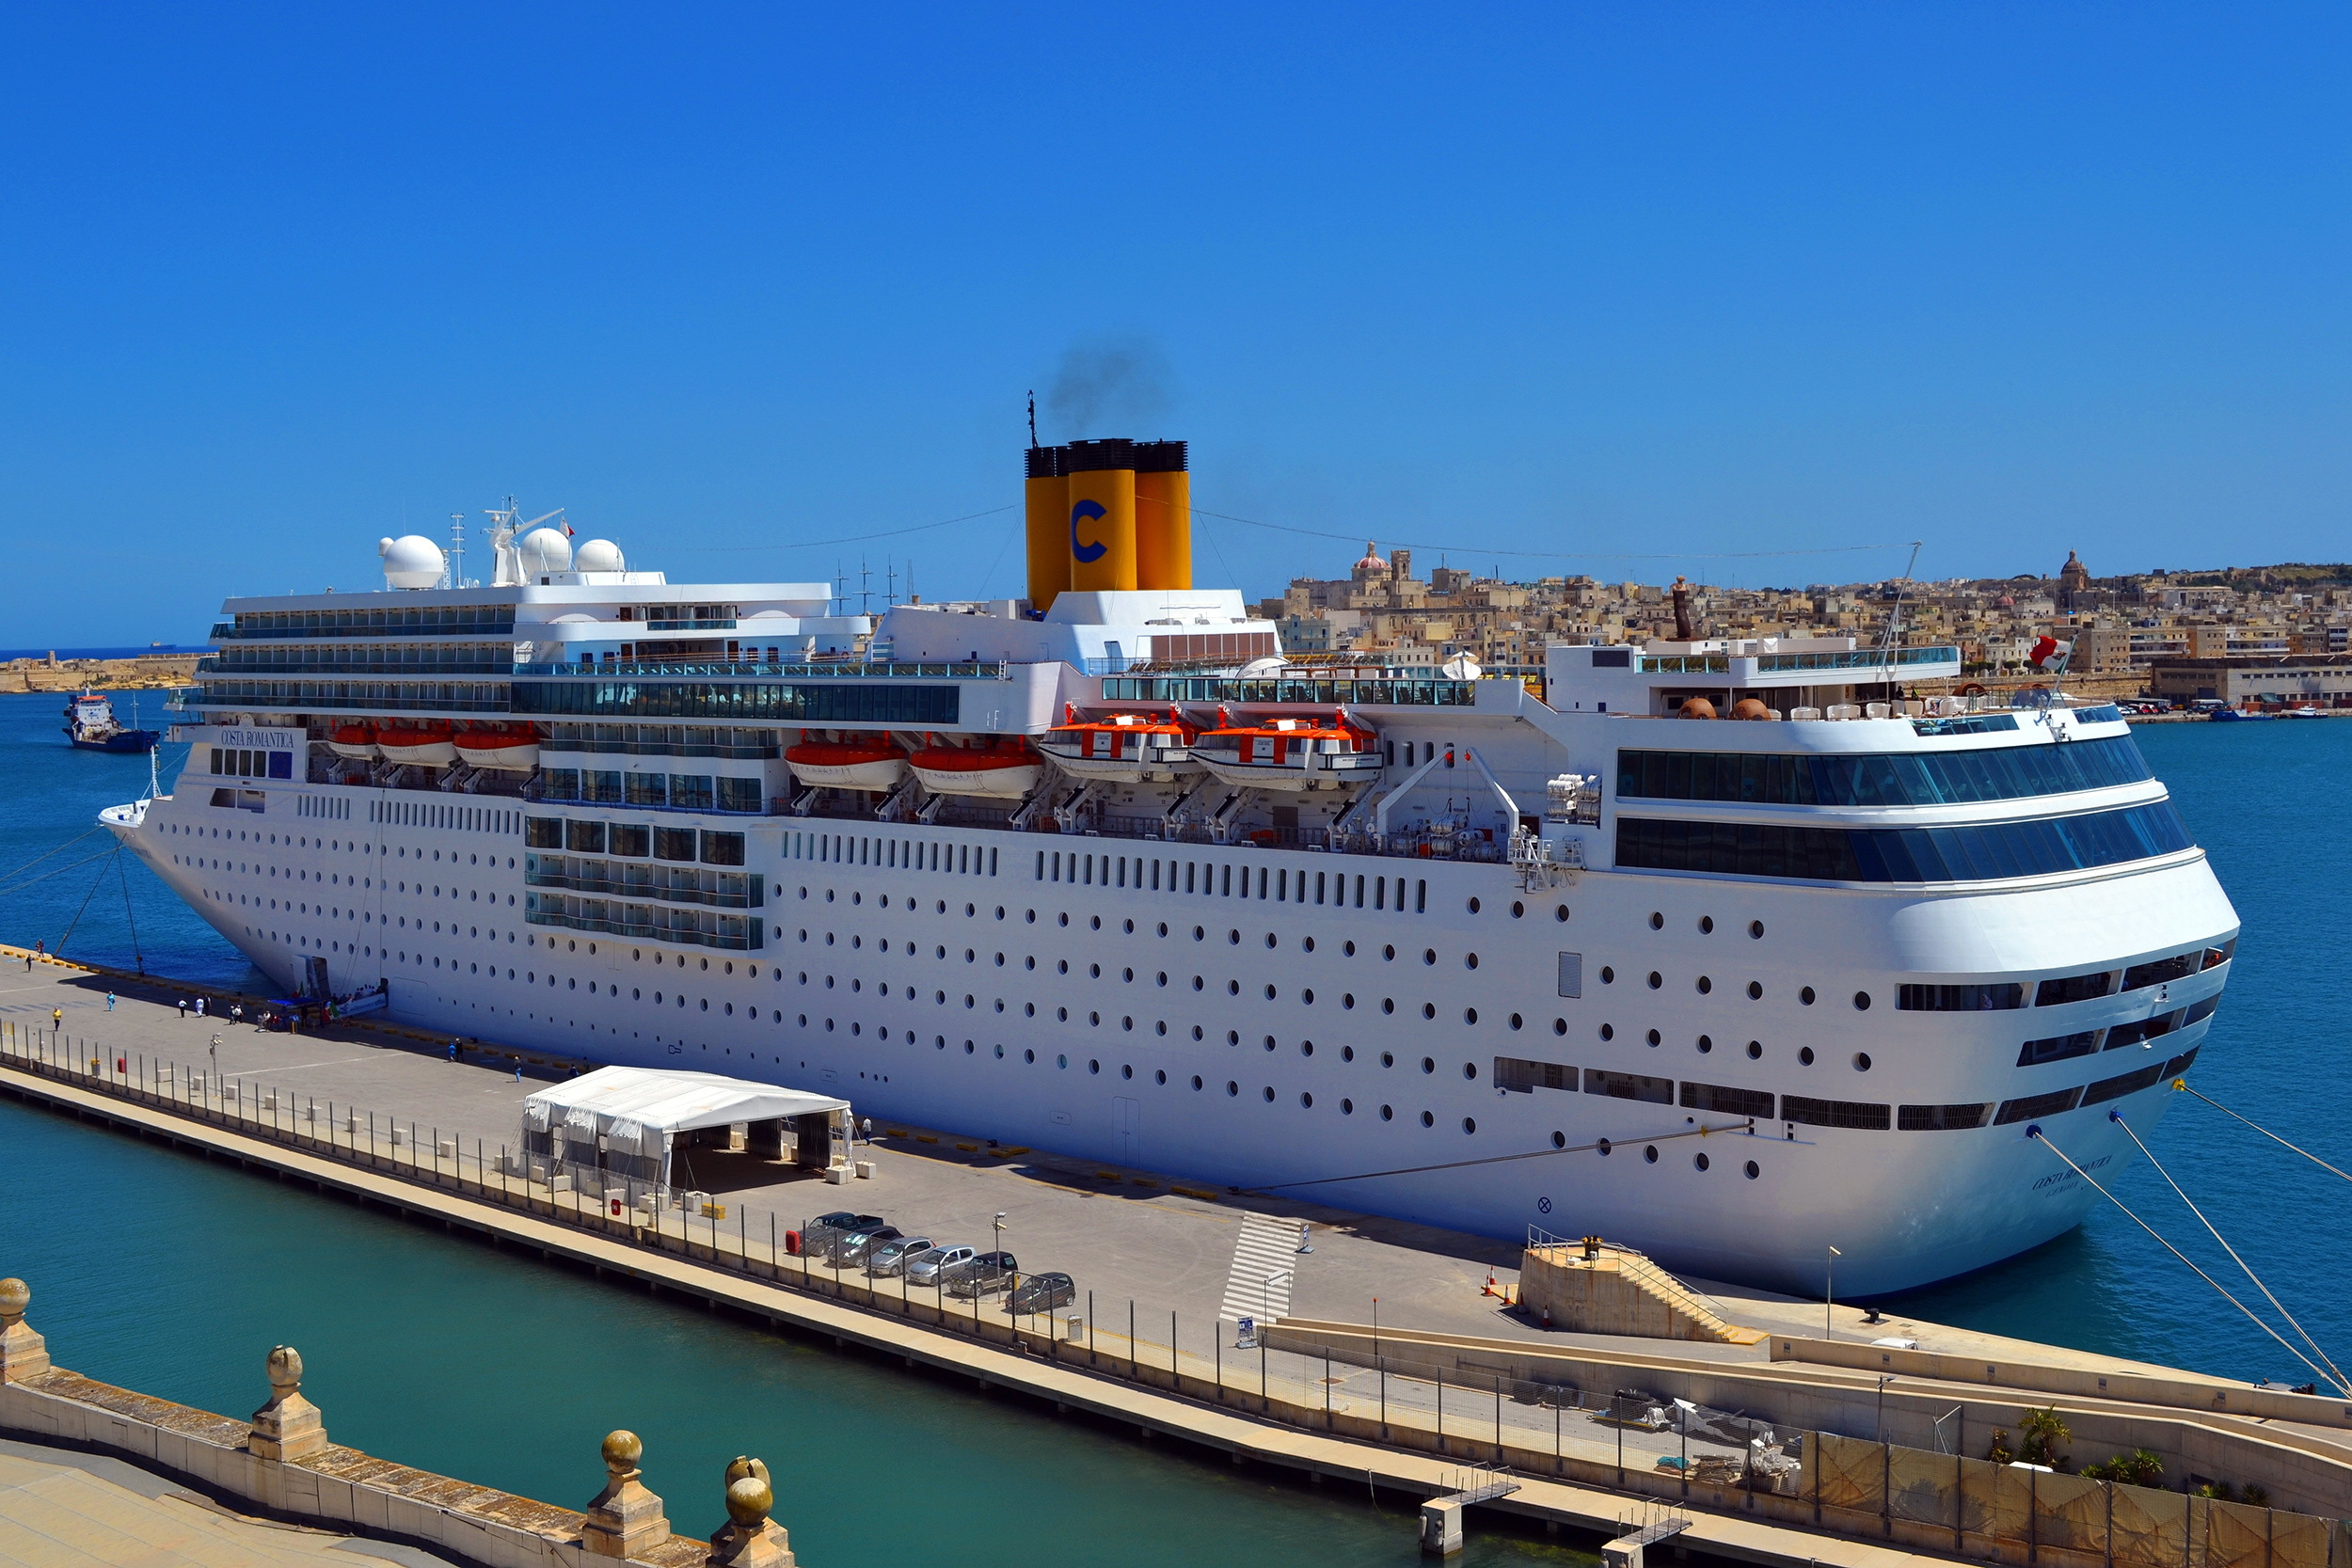 pier, miscellanea, miscellaneous, wharf, ship, berth, cruise ship, cruise liner, liner, costa neoromantica